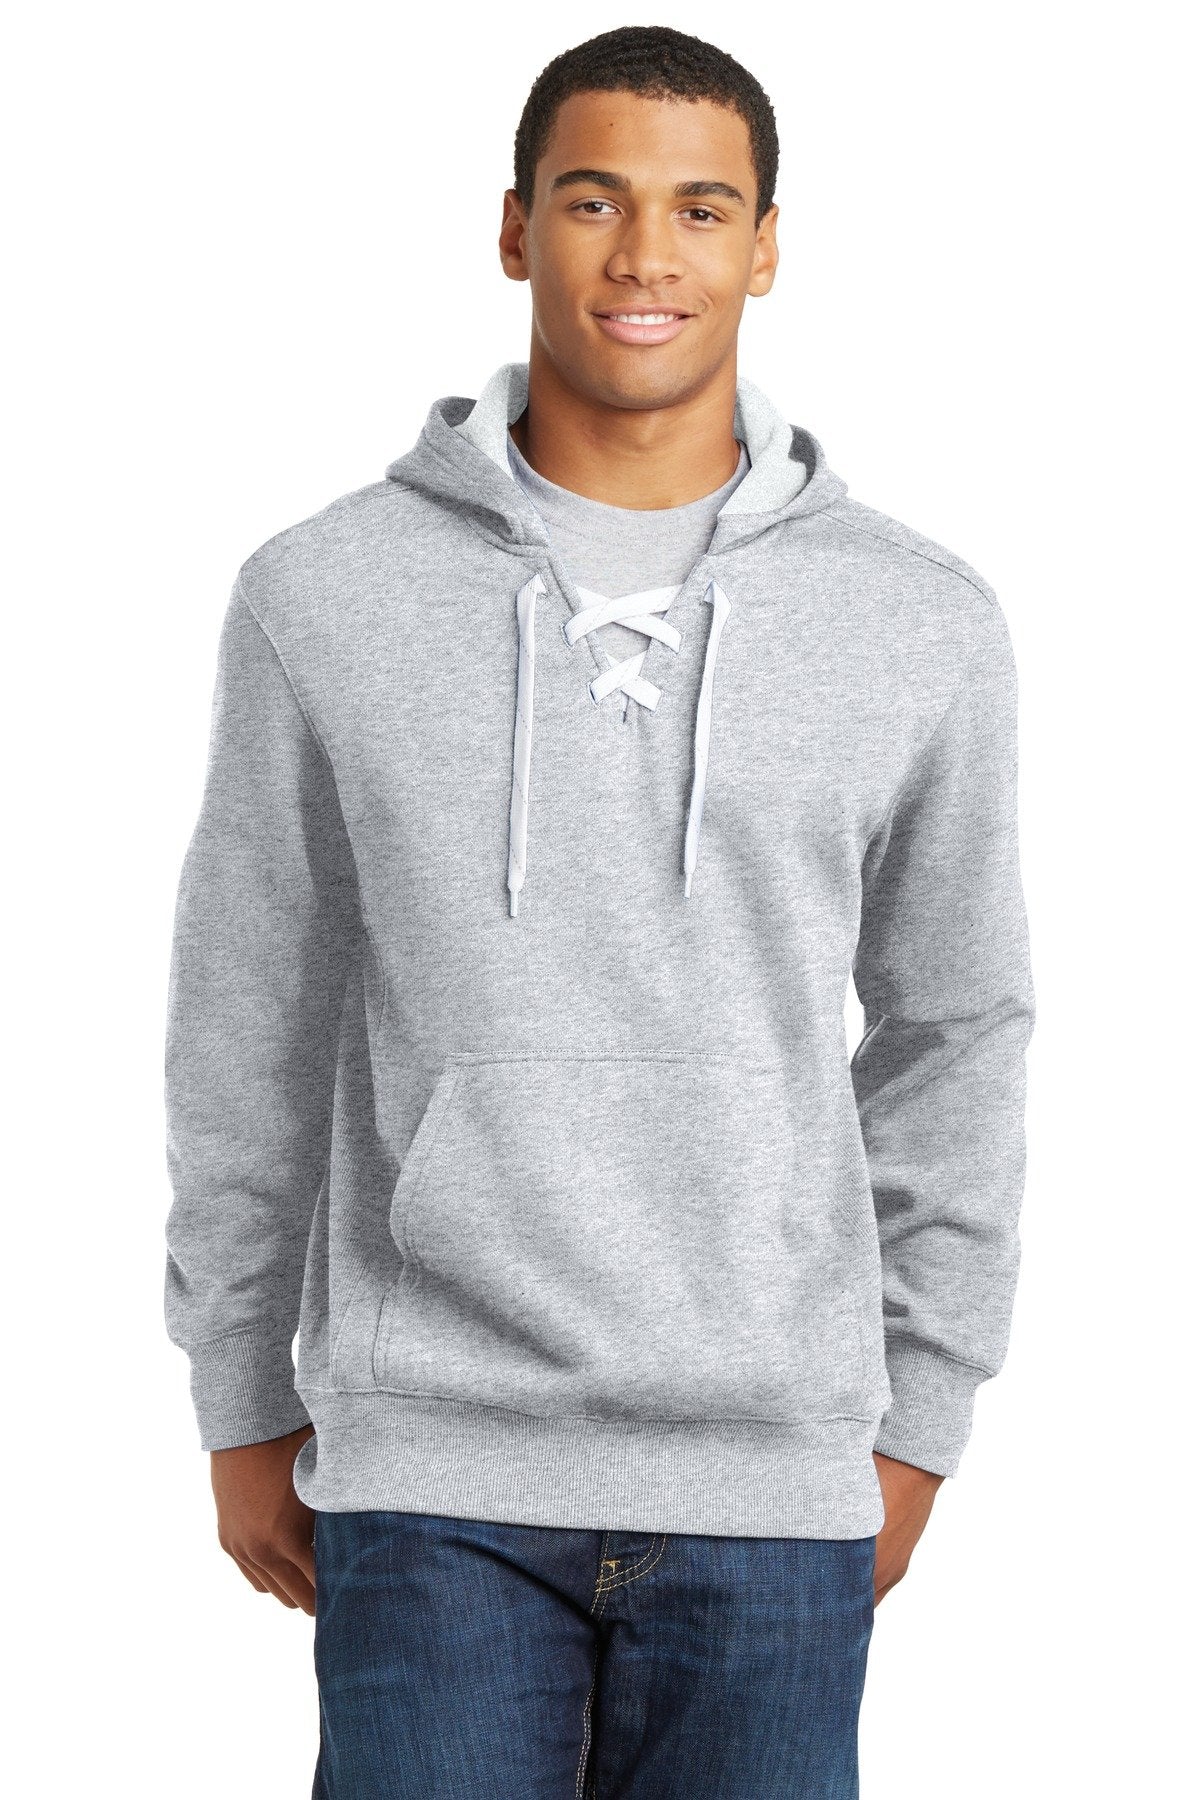 plain gray hoodie